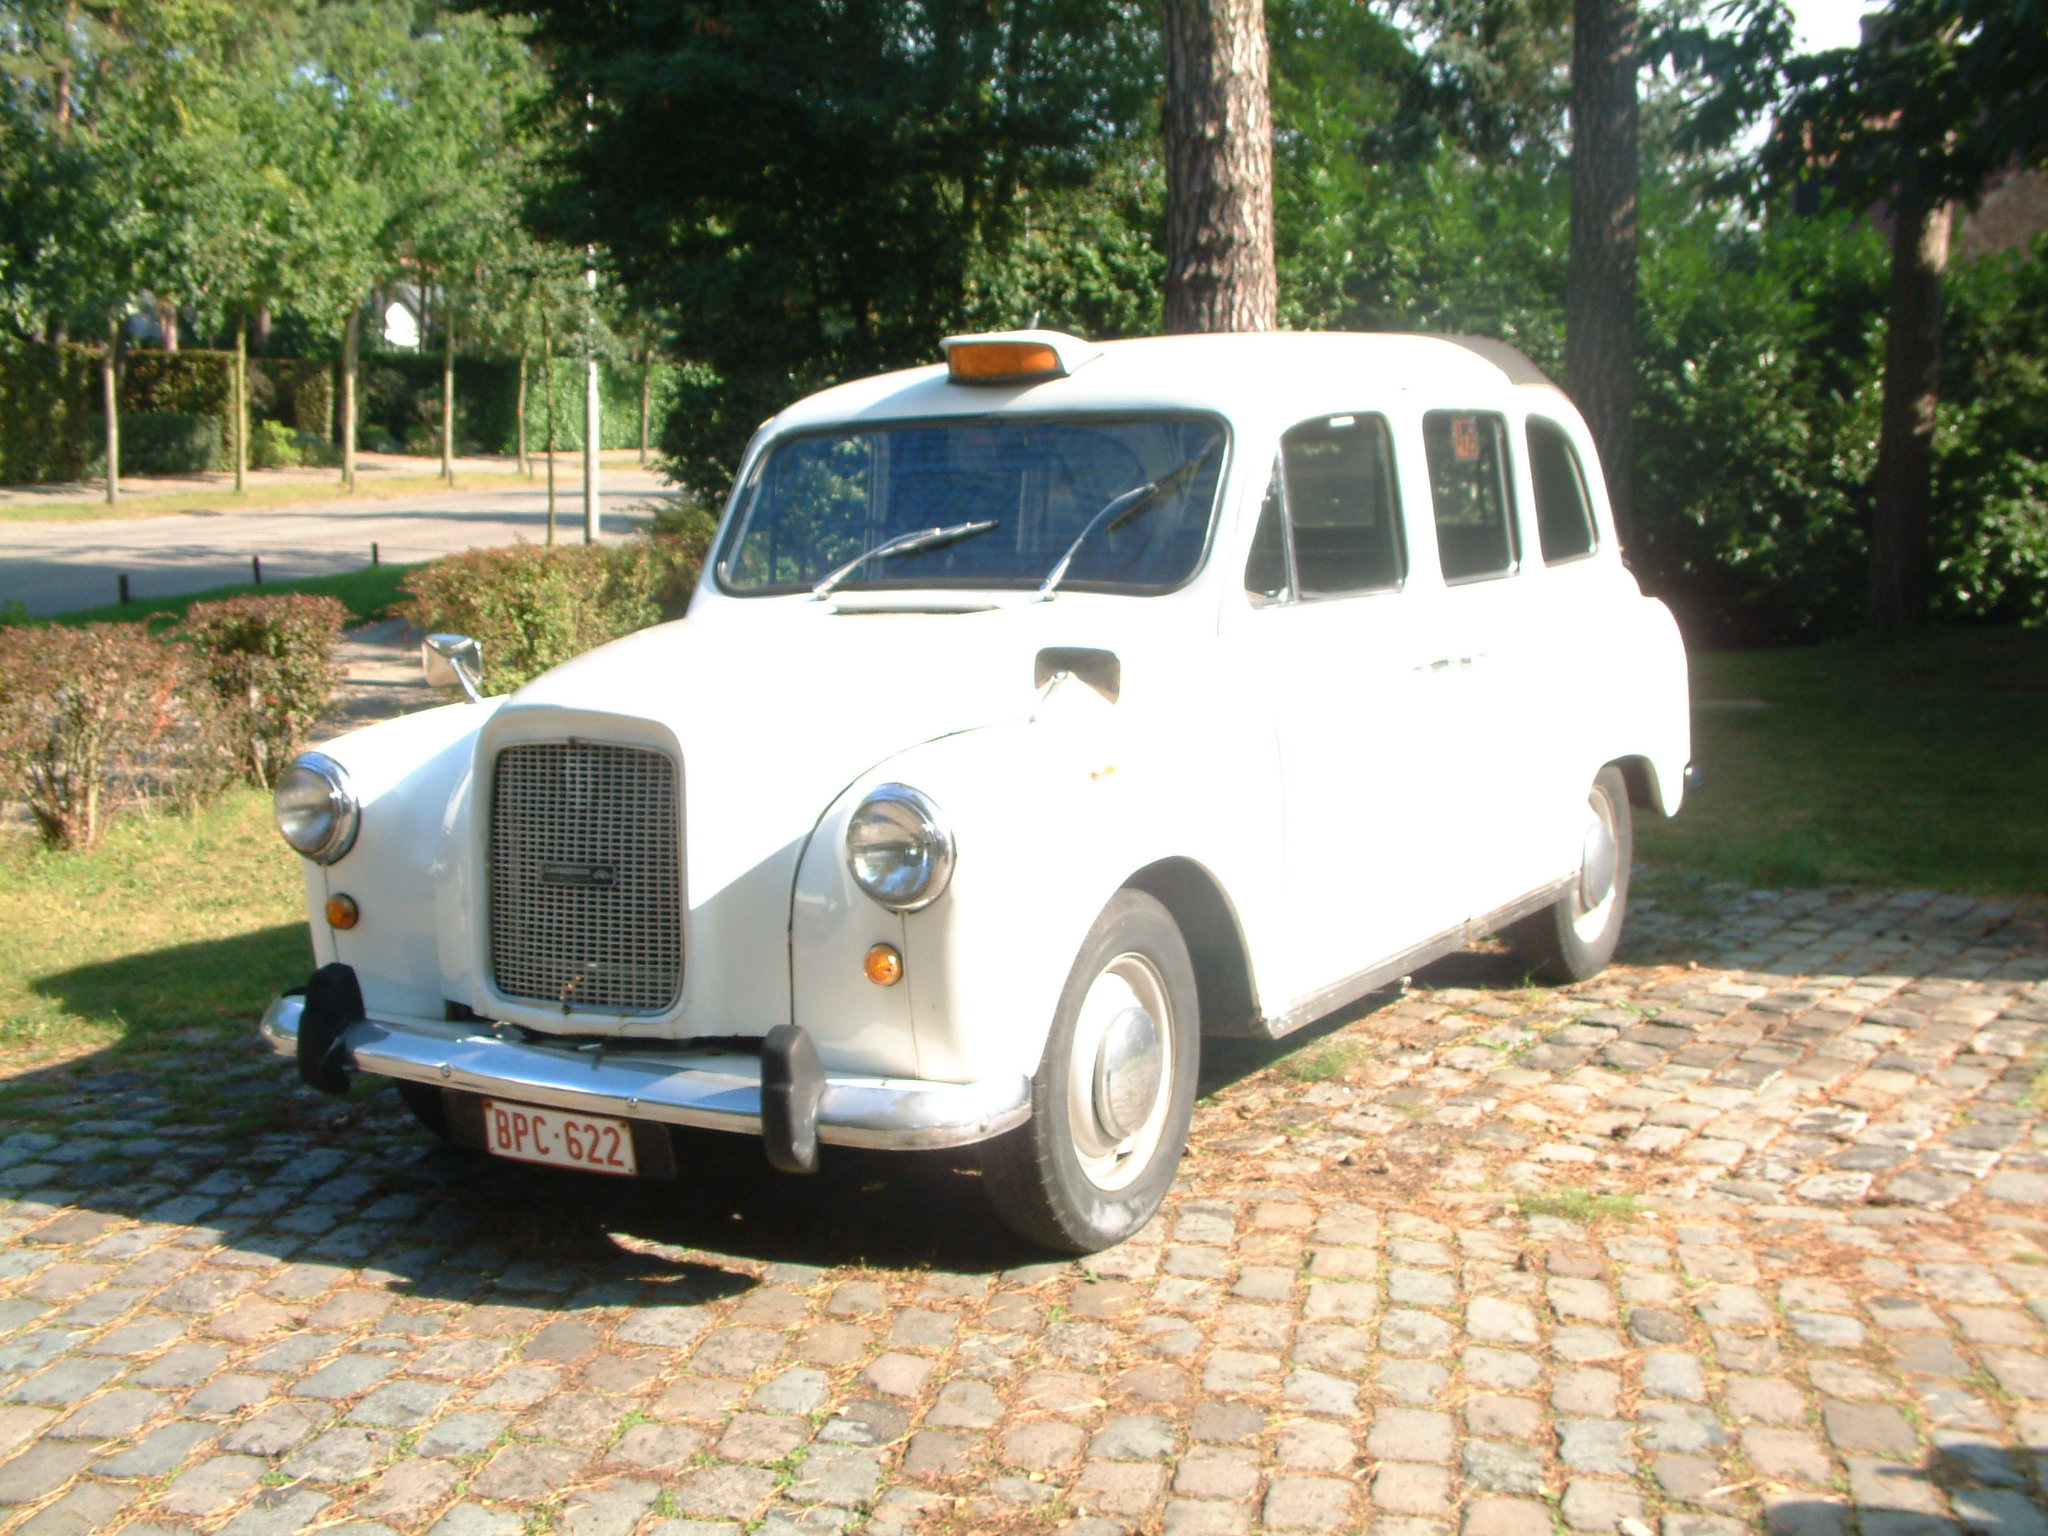 Londense witte Taxi Bruidswagen Huren. Engelse oldtimer bruidswagen